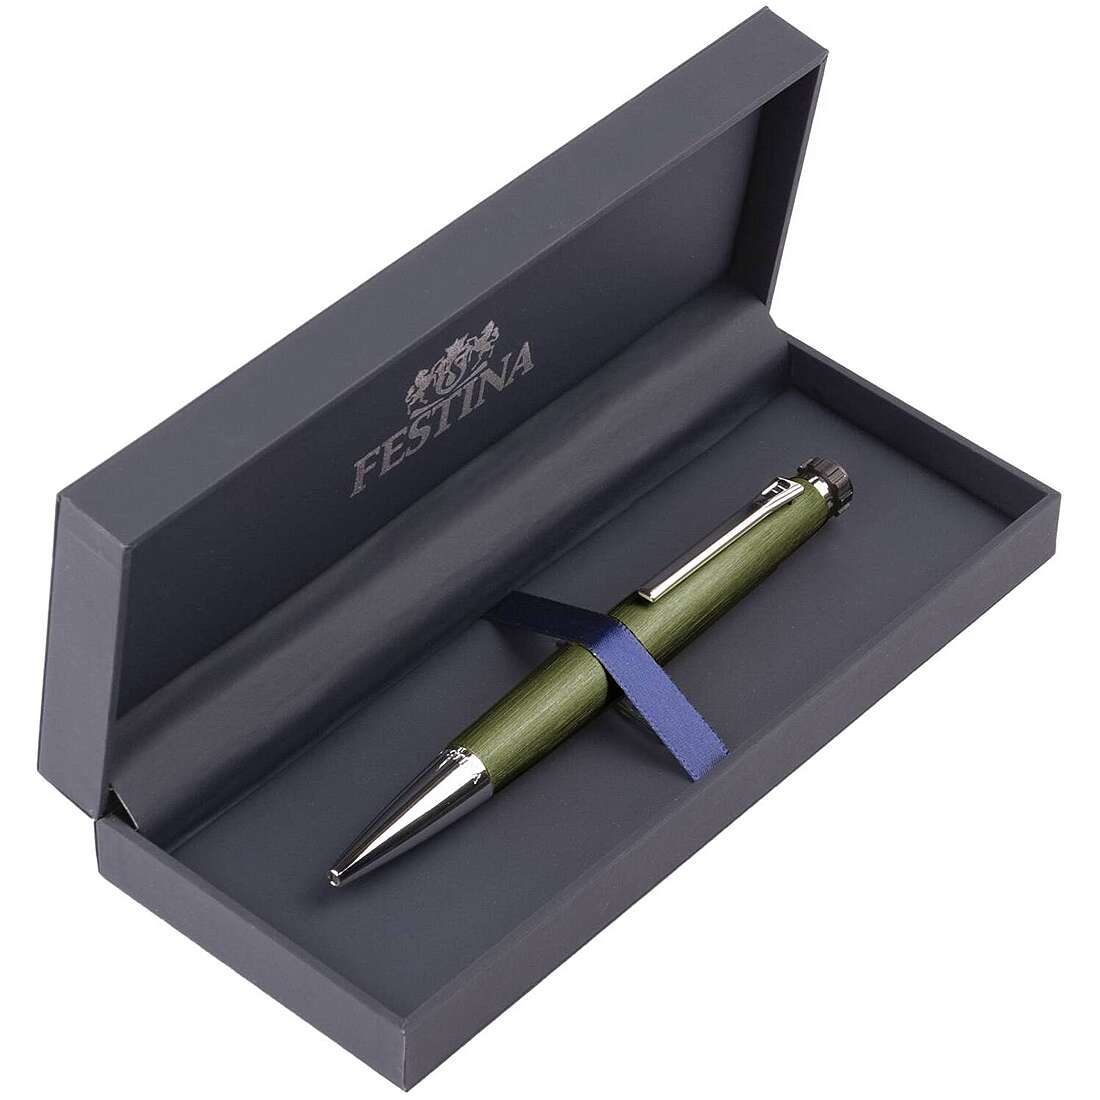 Customized pen with ballpoint by Festina Chrono Bike FWS4104/T